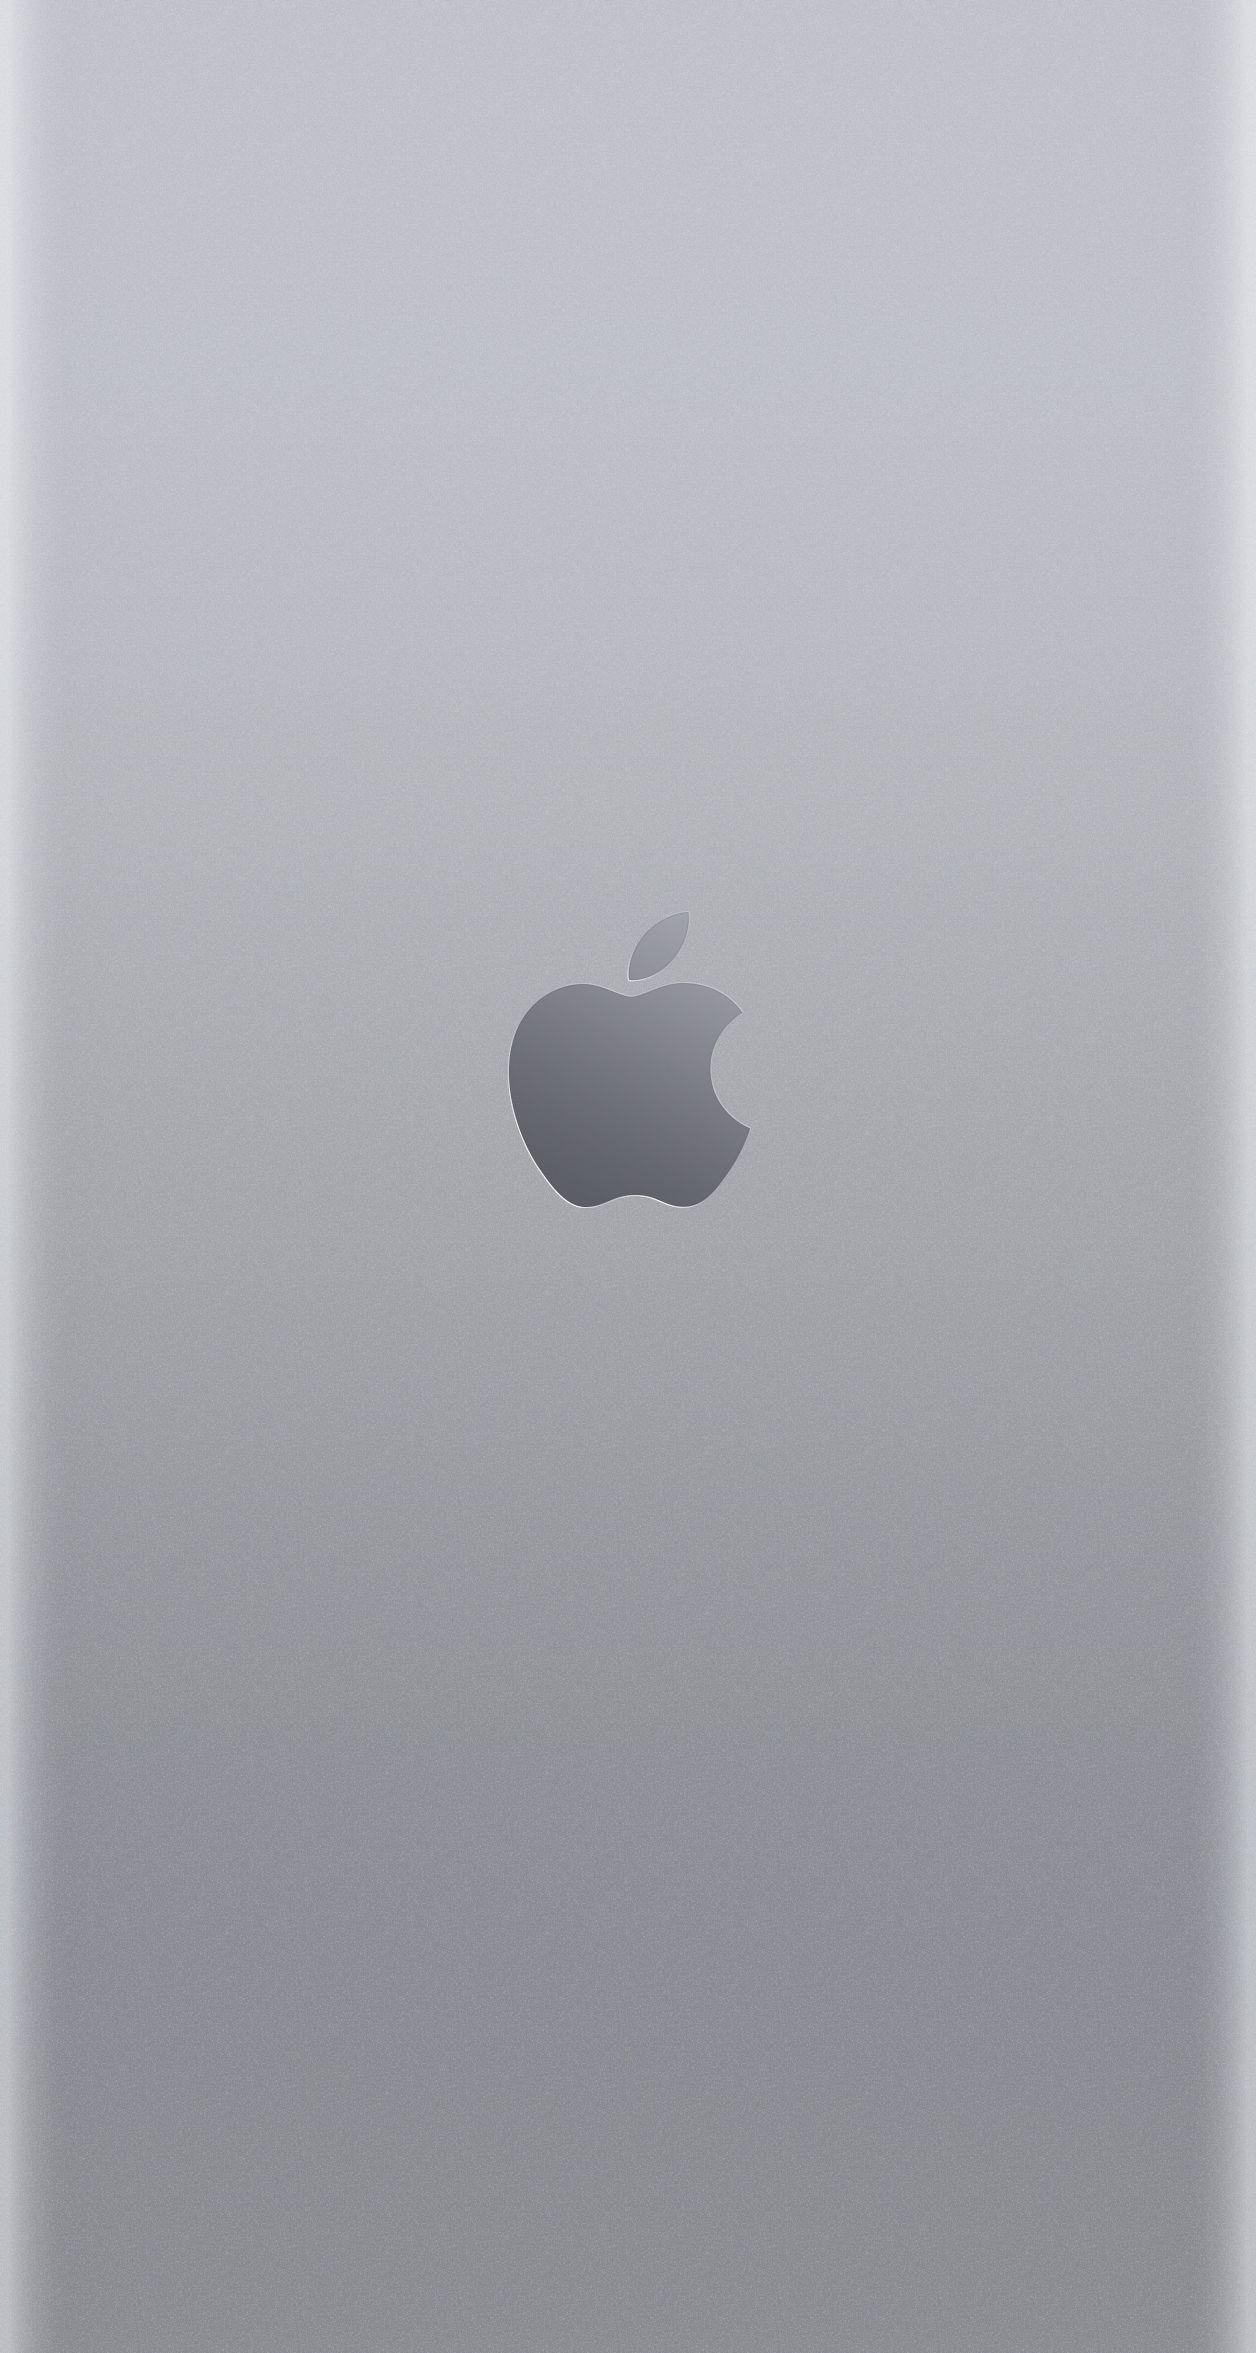 Silver Apple Logo - Apple logo wallpaper for iPhone 6